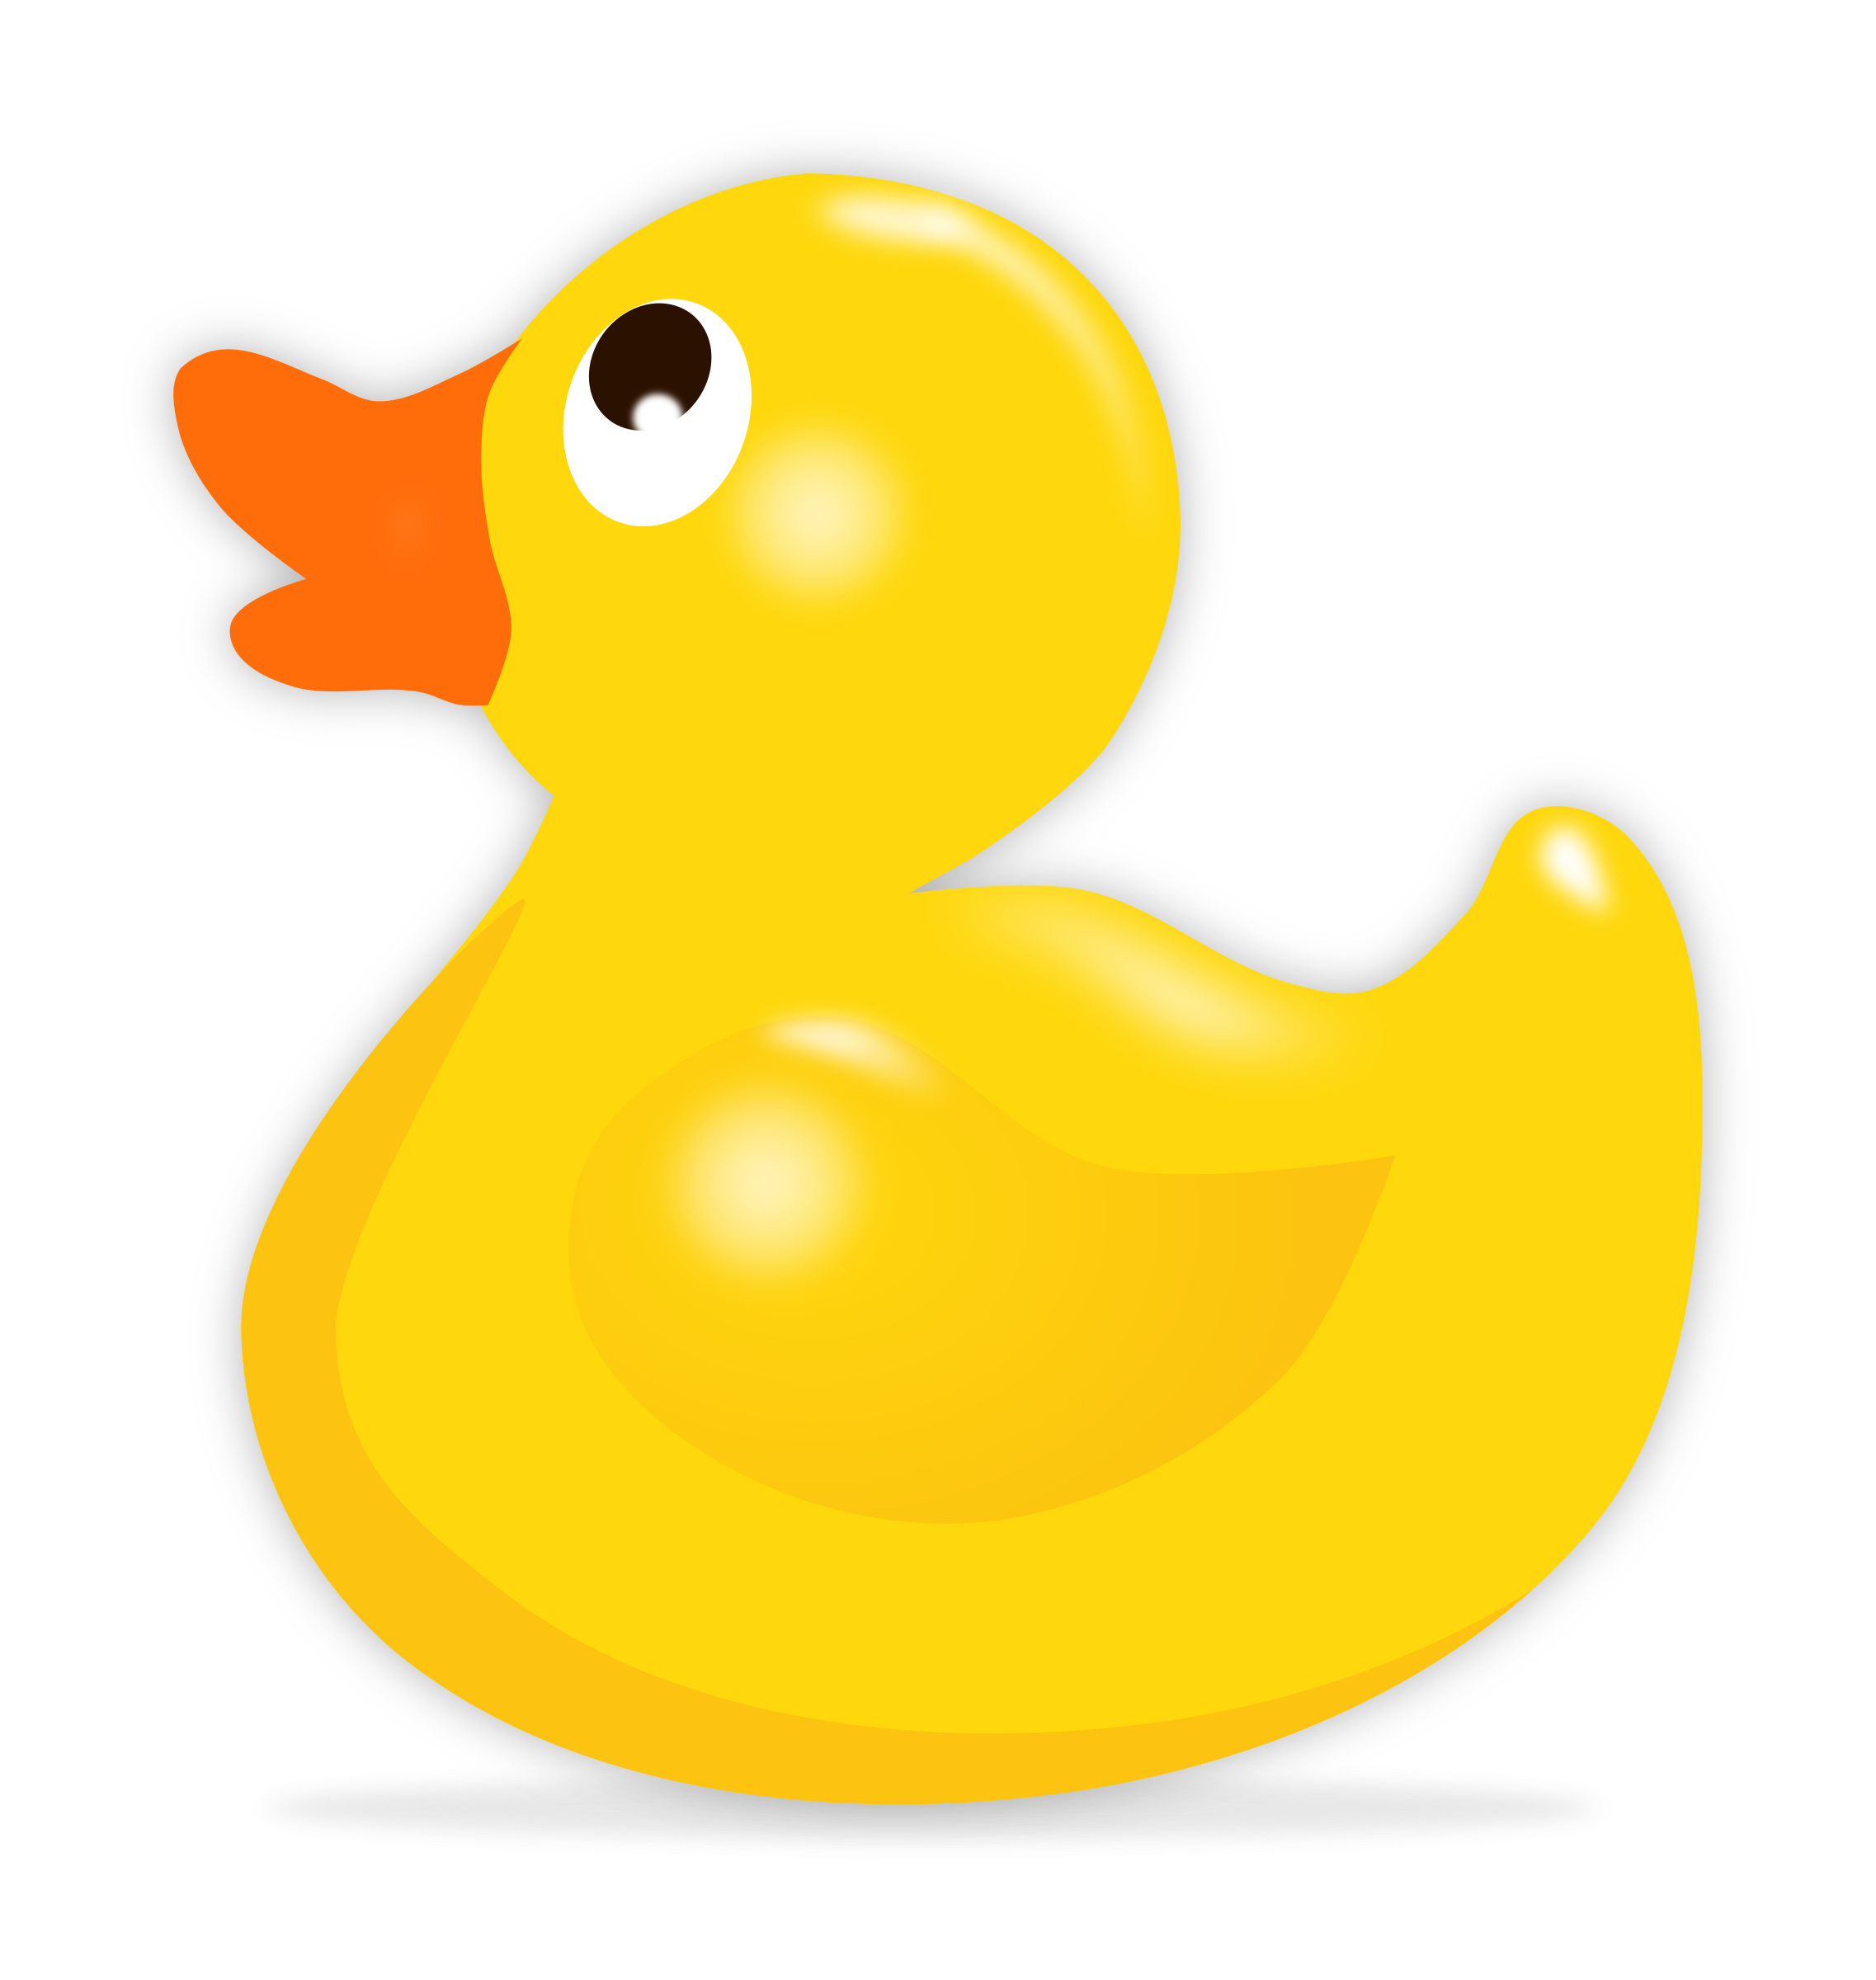 Rubber duck png images. Goose clipart charlotte's web